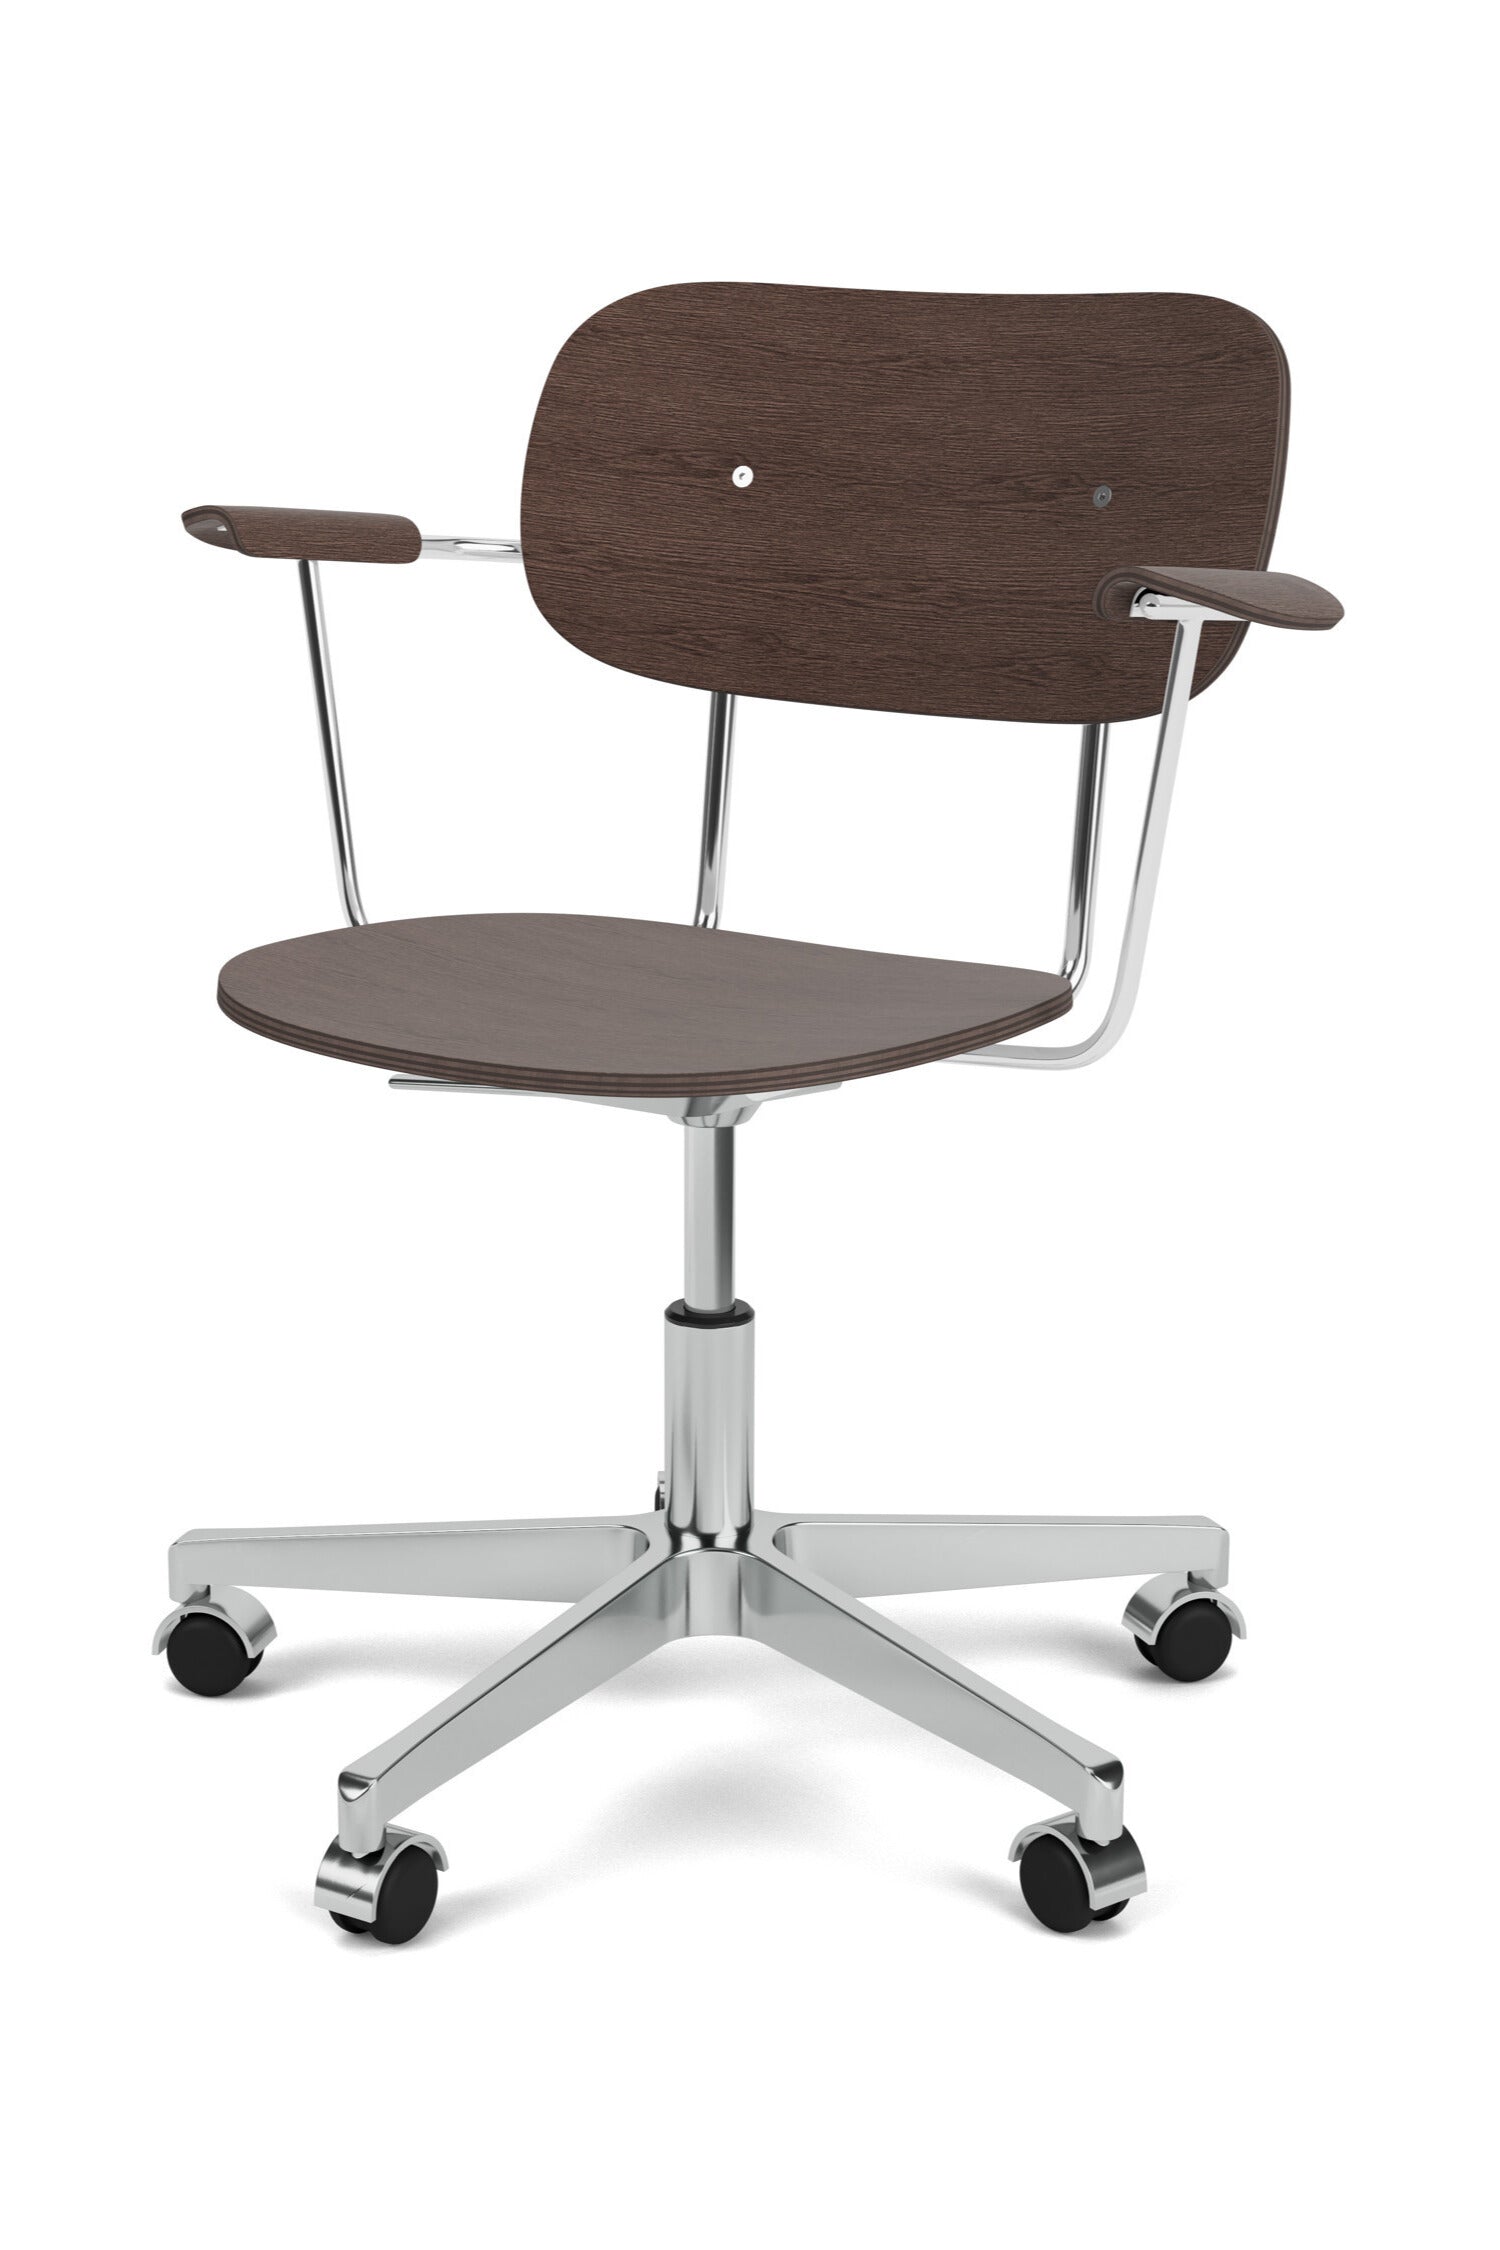 Co Task Chair veneer dark stained oak with brown veneer and polished aluminum base.